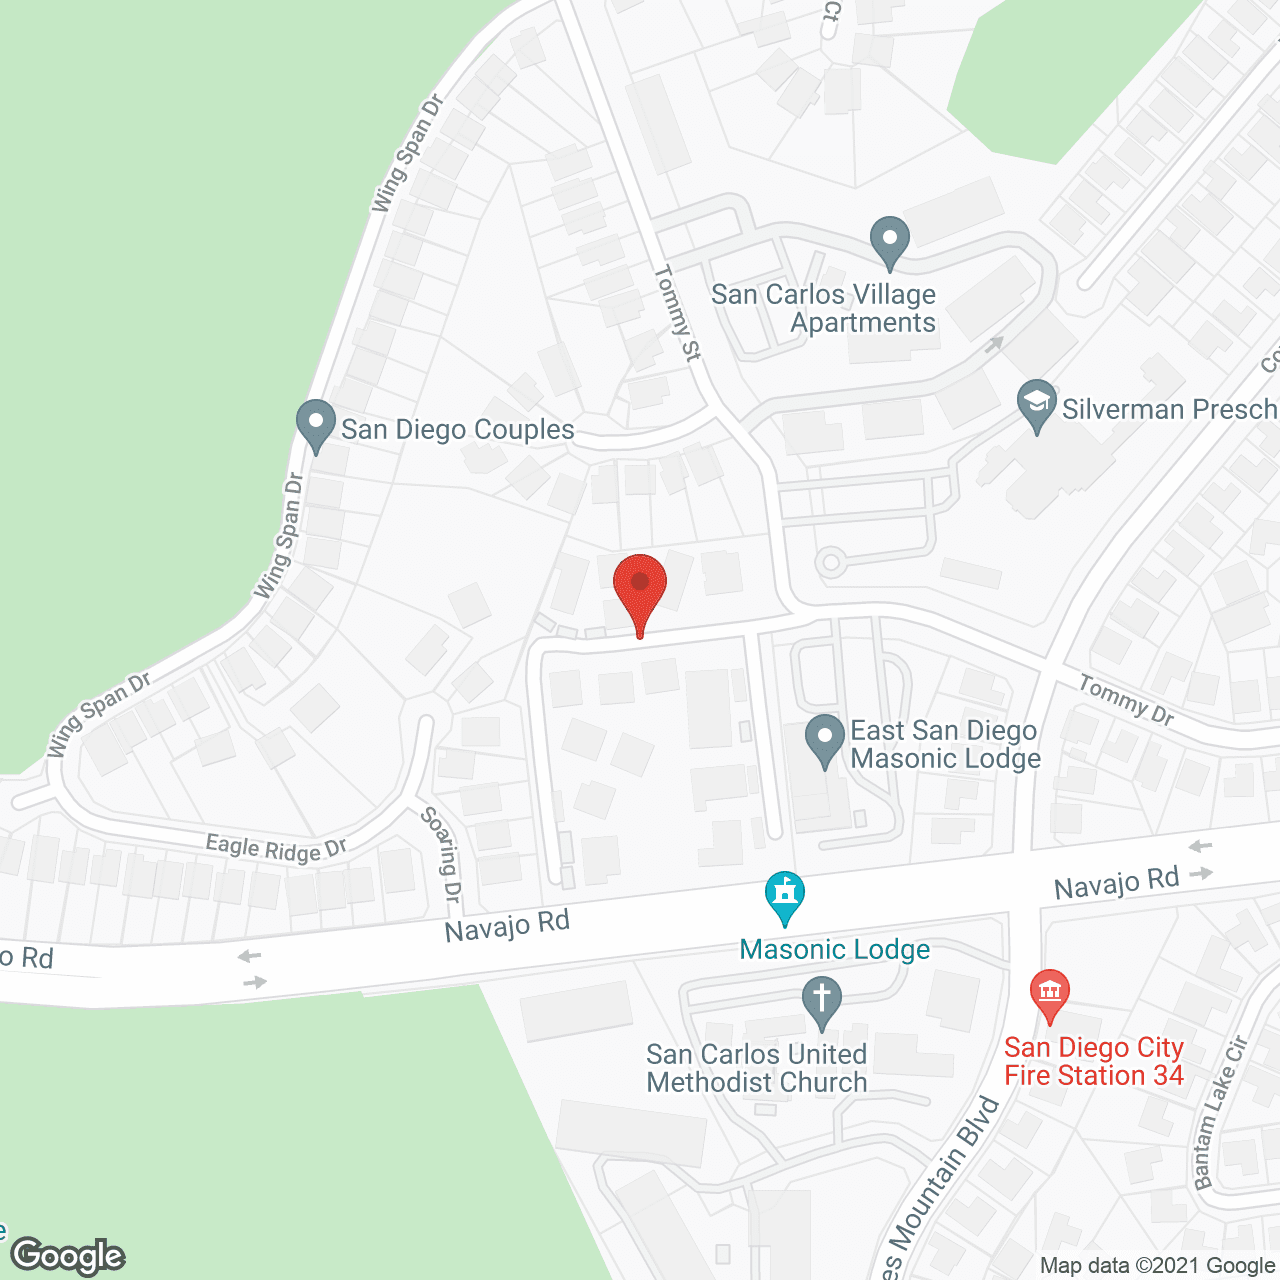 San Carlos Village Apartments in google map